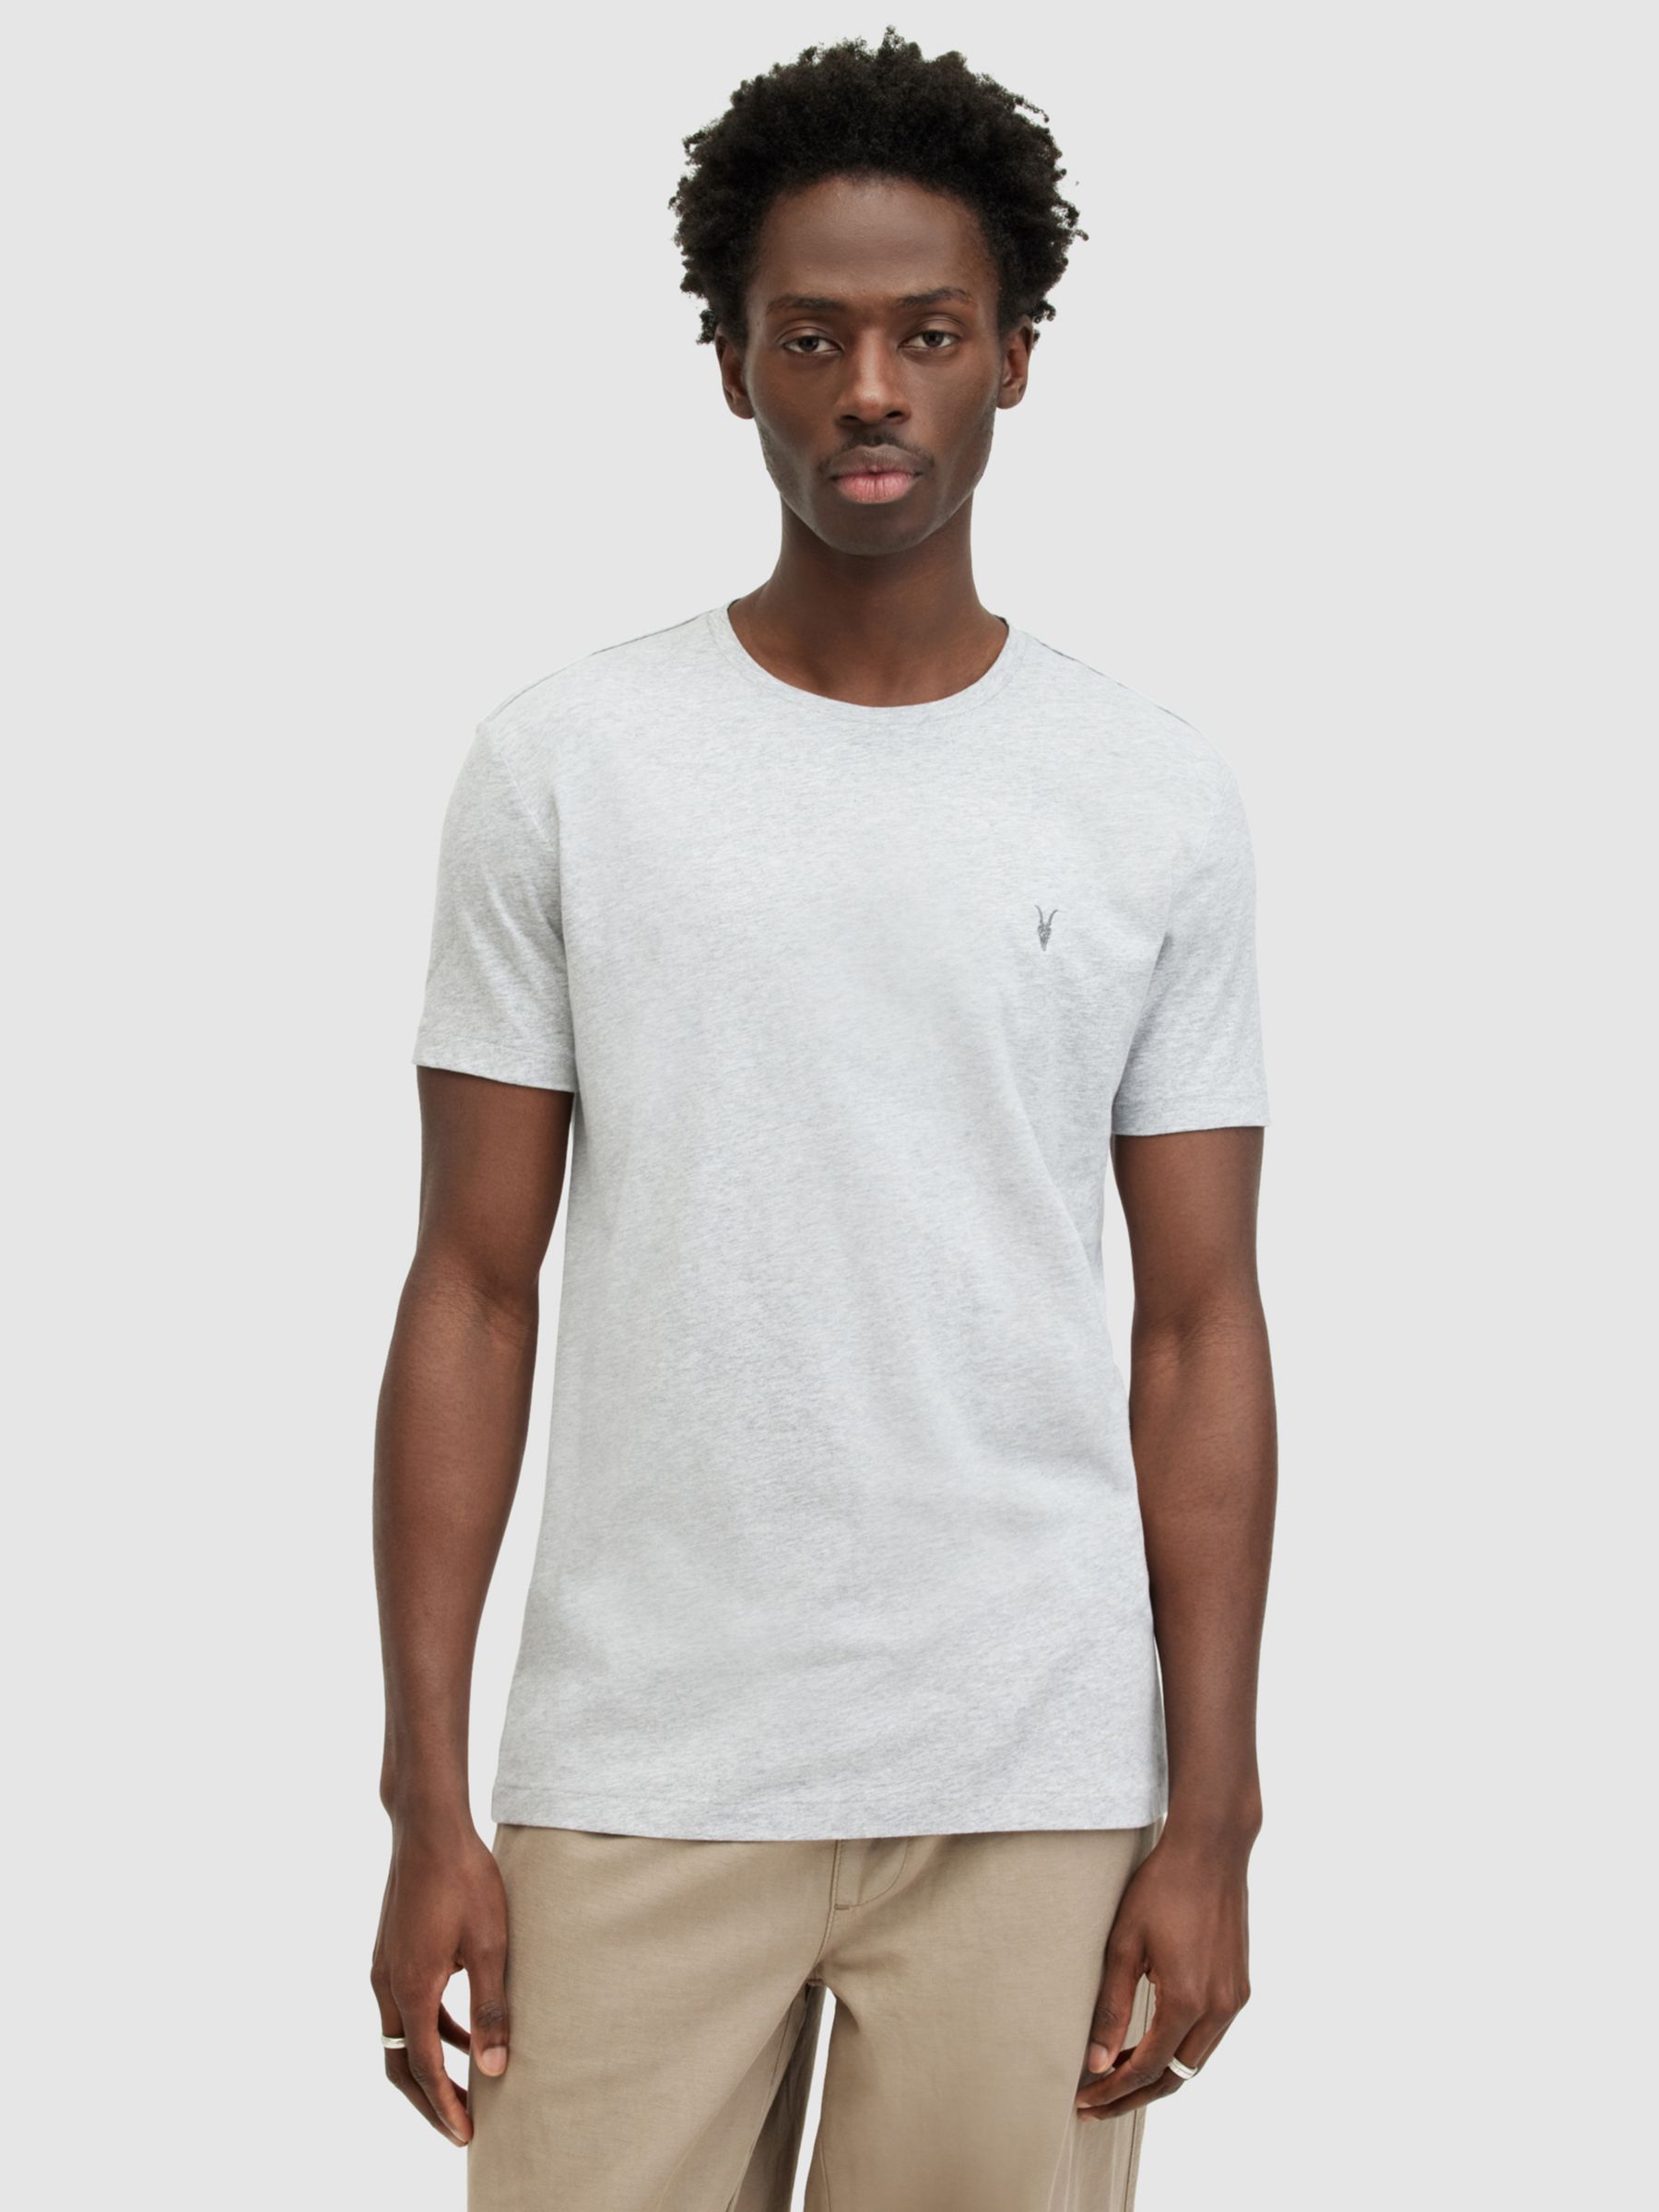 AllSaints Tonic Crew Neck T-Shirt, Pack of 3, White/Black/Grey, XS